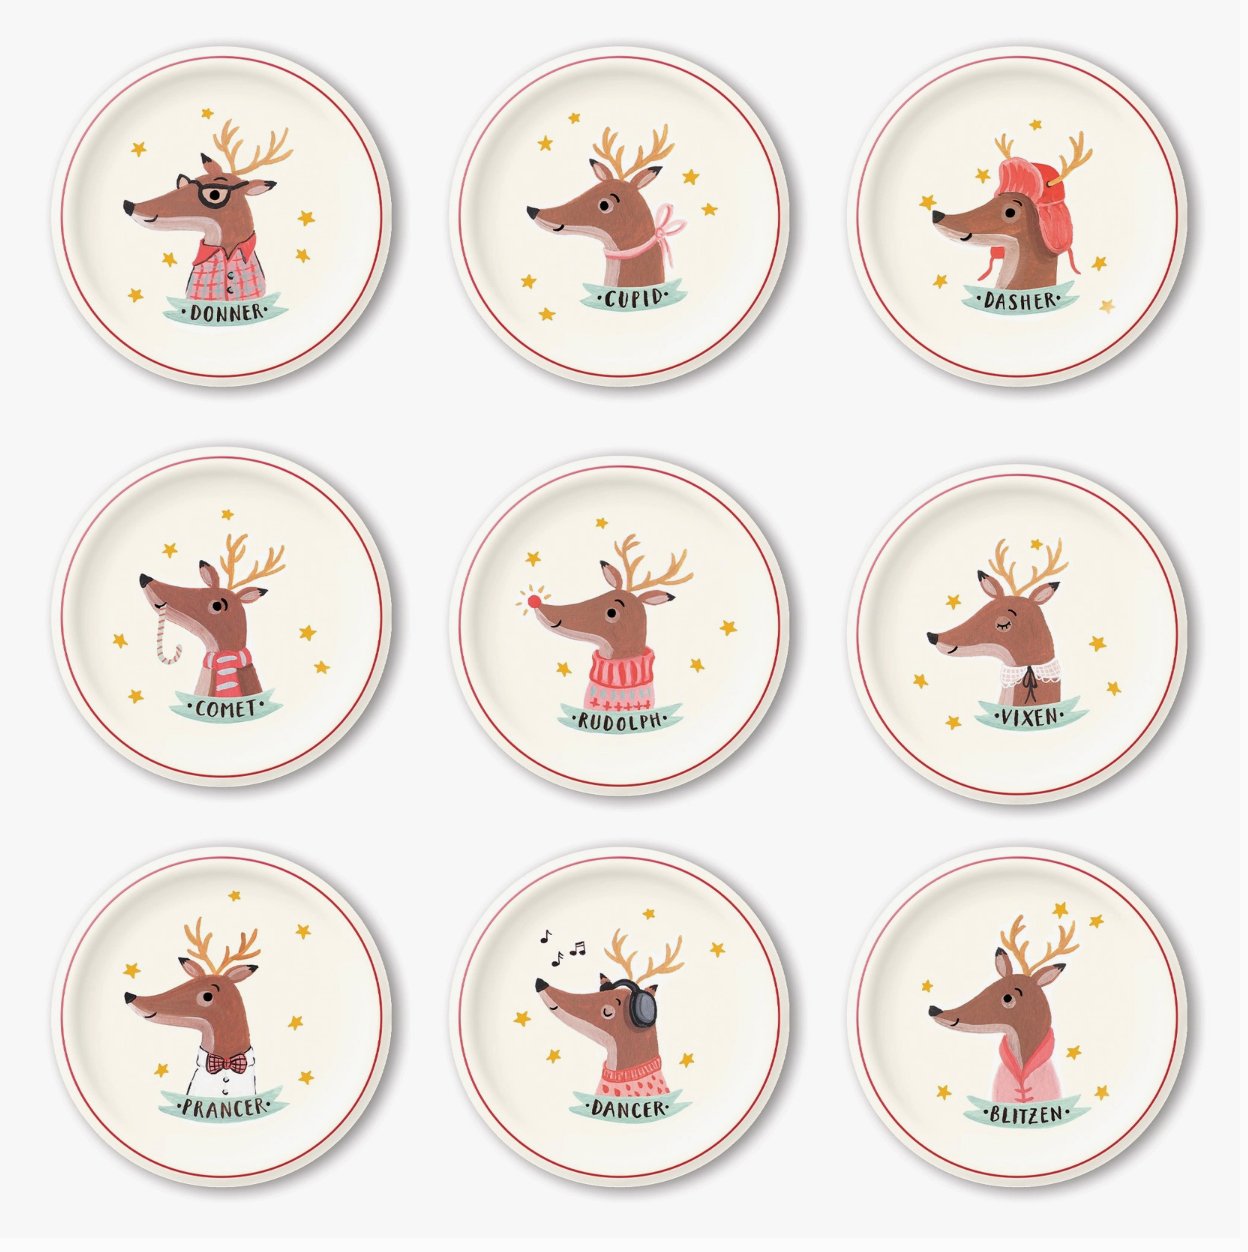 Rudolph + Reindeer Friends Paper Plate Set - Henry + Olives